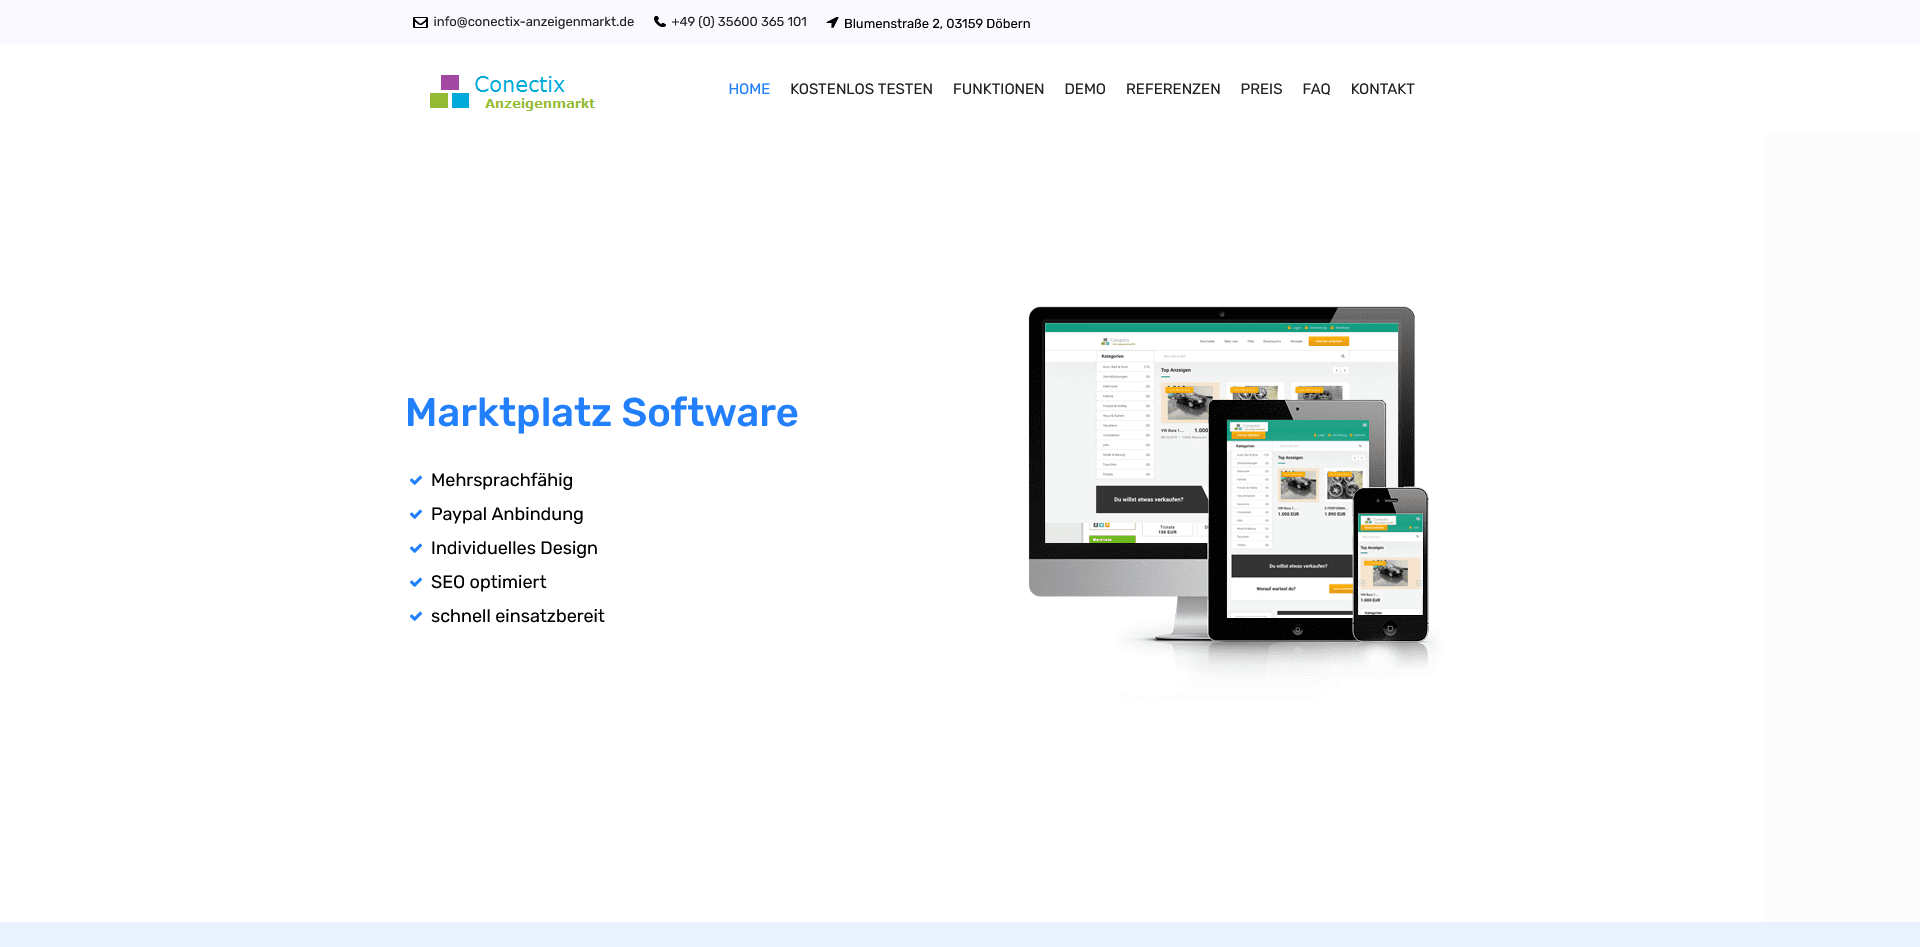 Screenshot 2022 06 01 at 12 49 53 Marktplatz Software Conectix Anzeigenmarkt.de